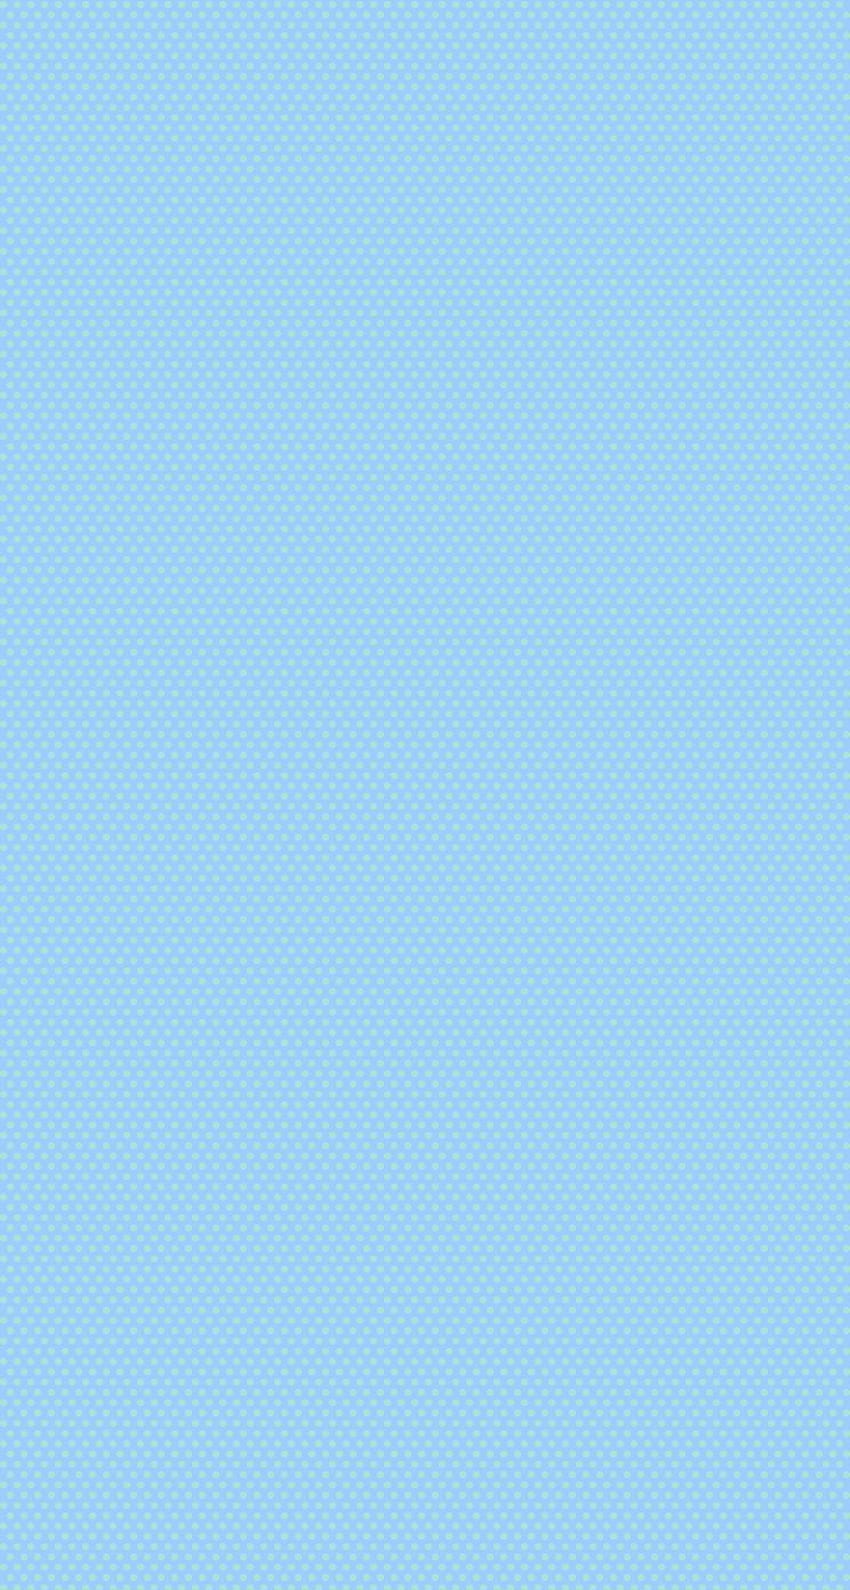 Latar Belakang Biru Muda Atas Biru Muda, Langit Biru Muda wallpaper ponsel HD